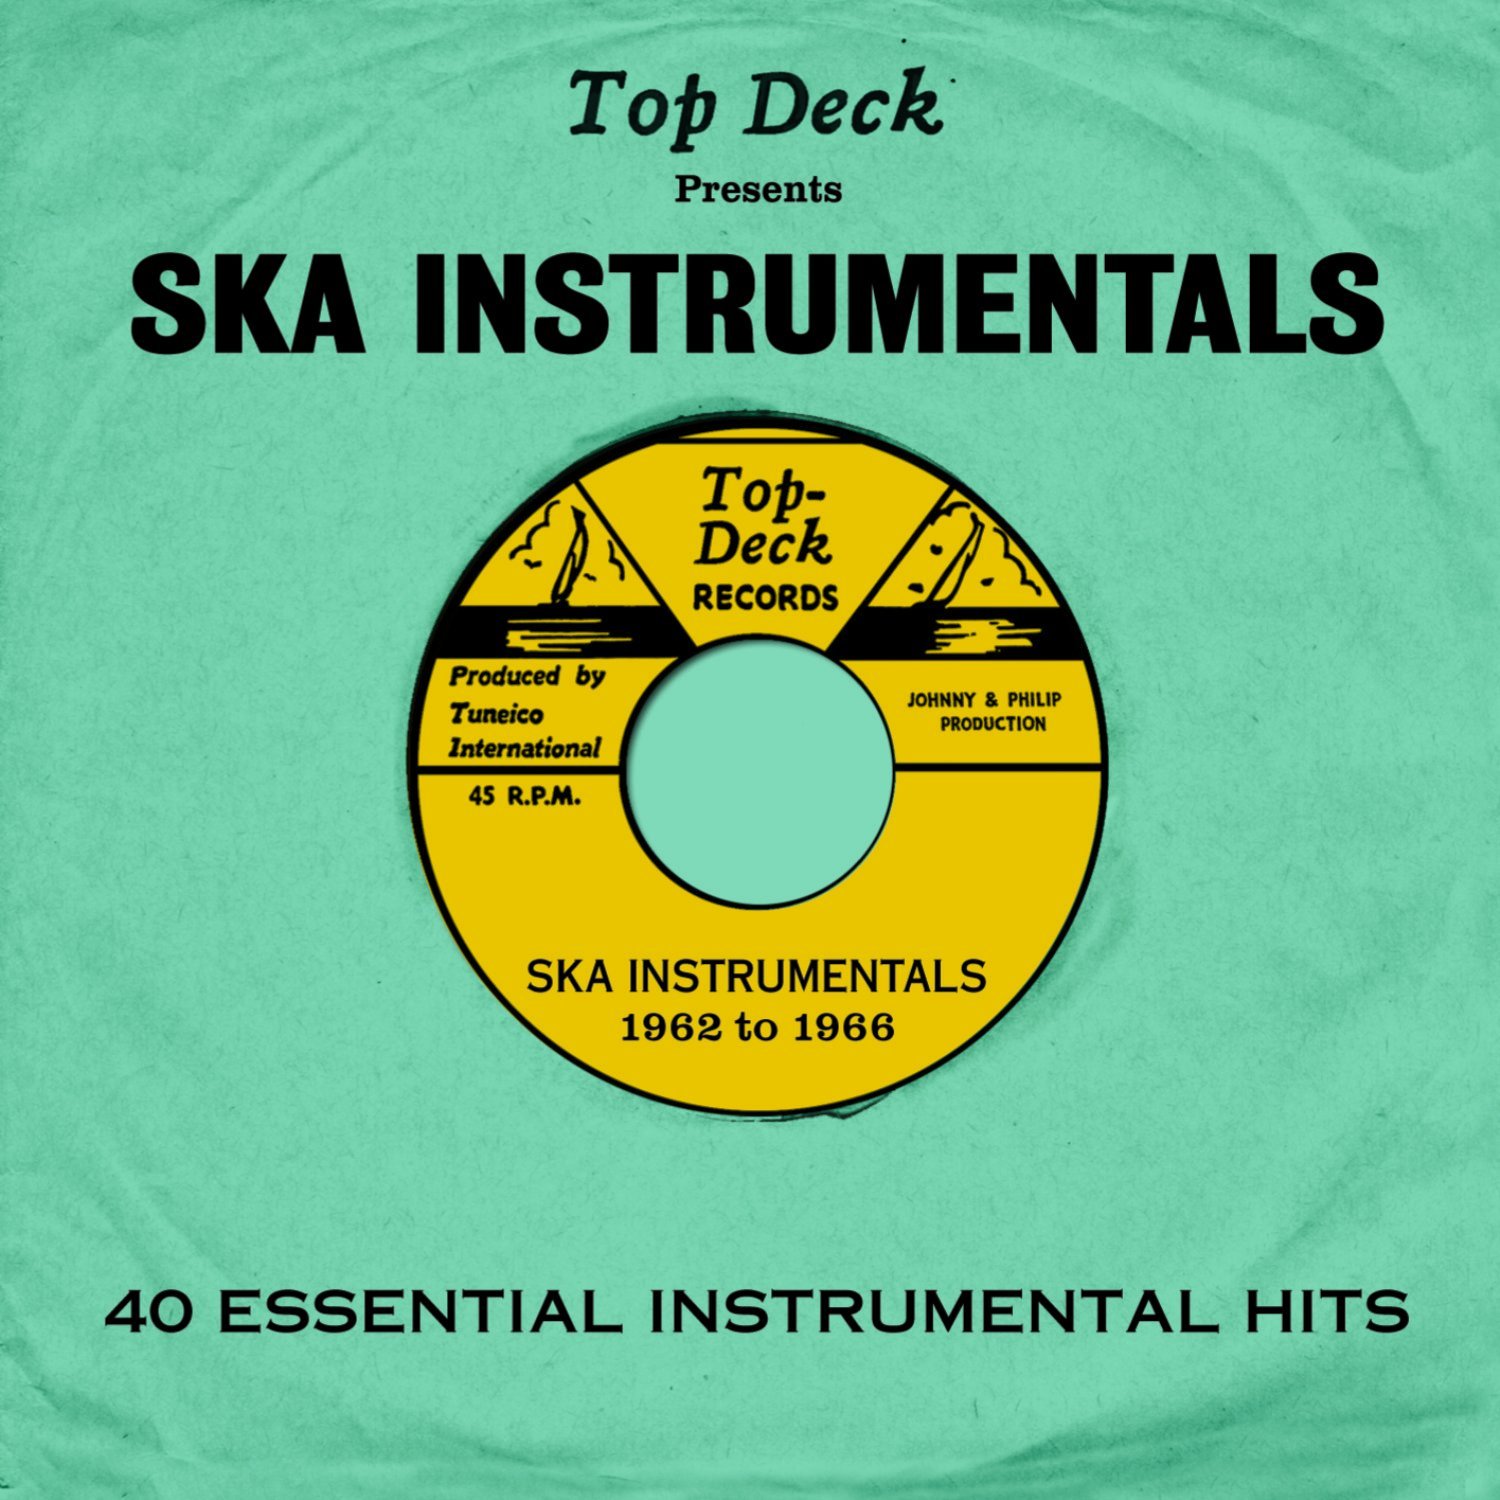 TOP DECK PRESENTS: SKA INSTRUMENTALS - 40 Essential Instrumental Hits 1962 to 1966